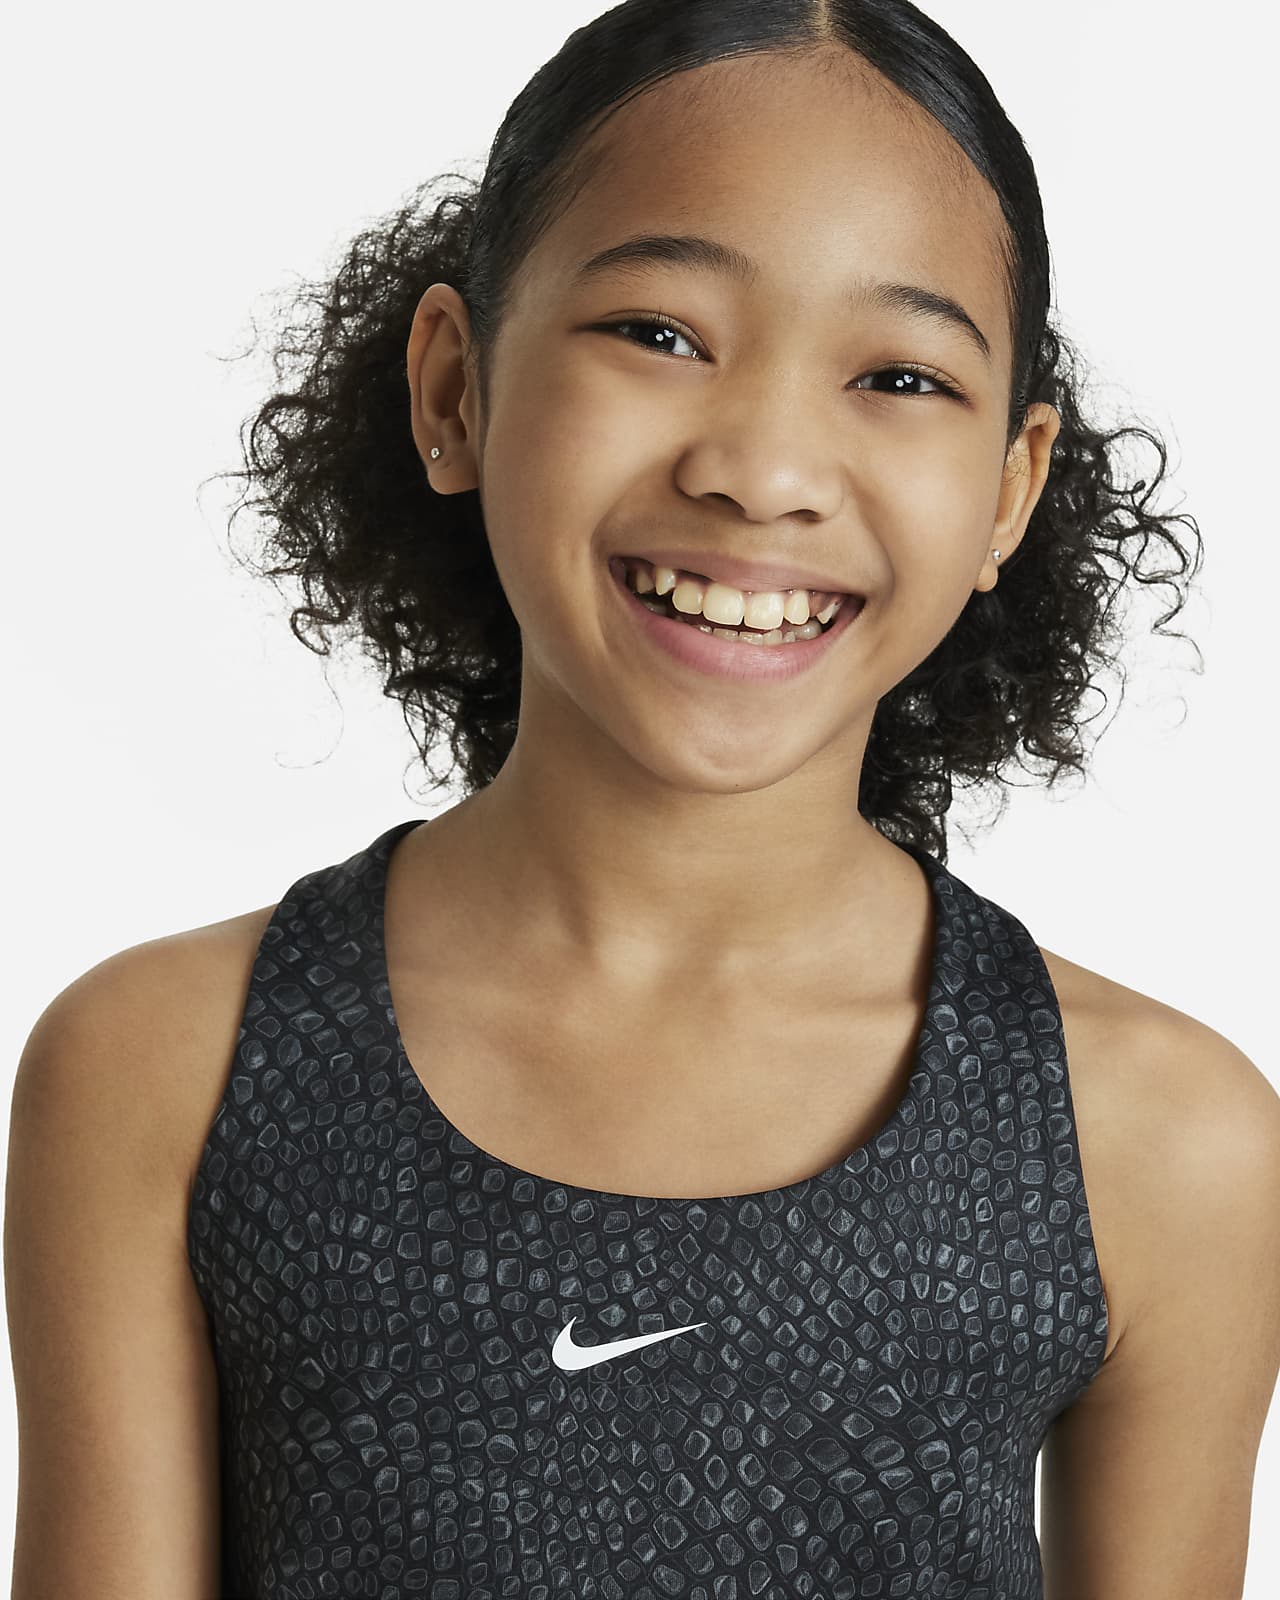 Girls Sports Bras. Nike ID